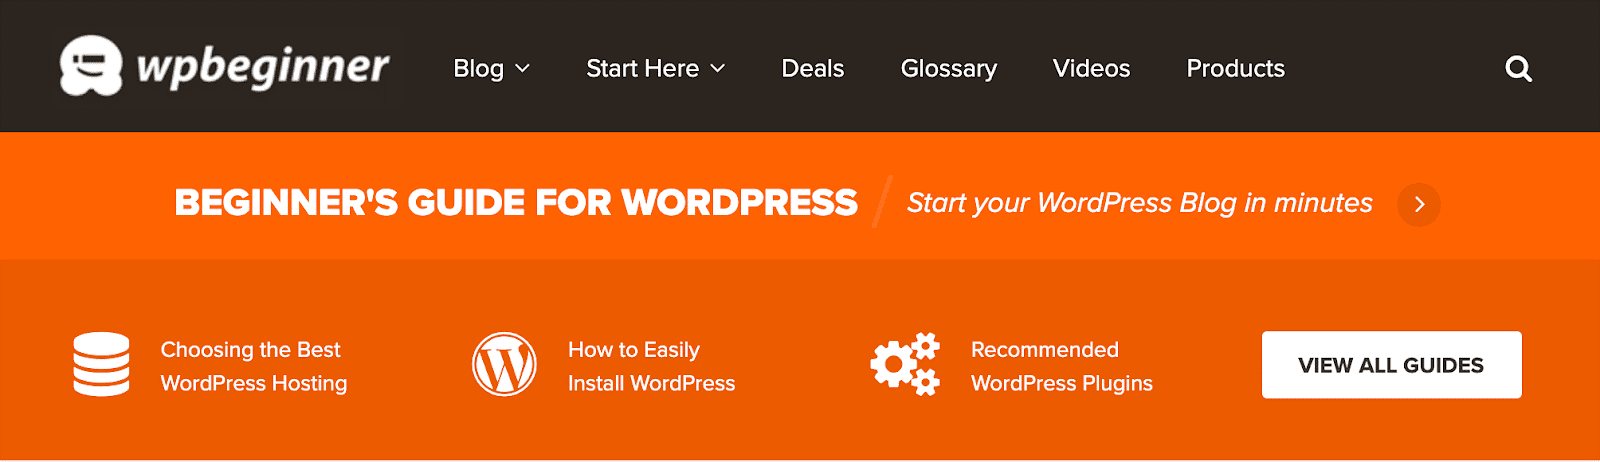 beginner guide wordpress